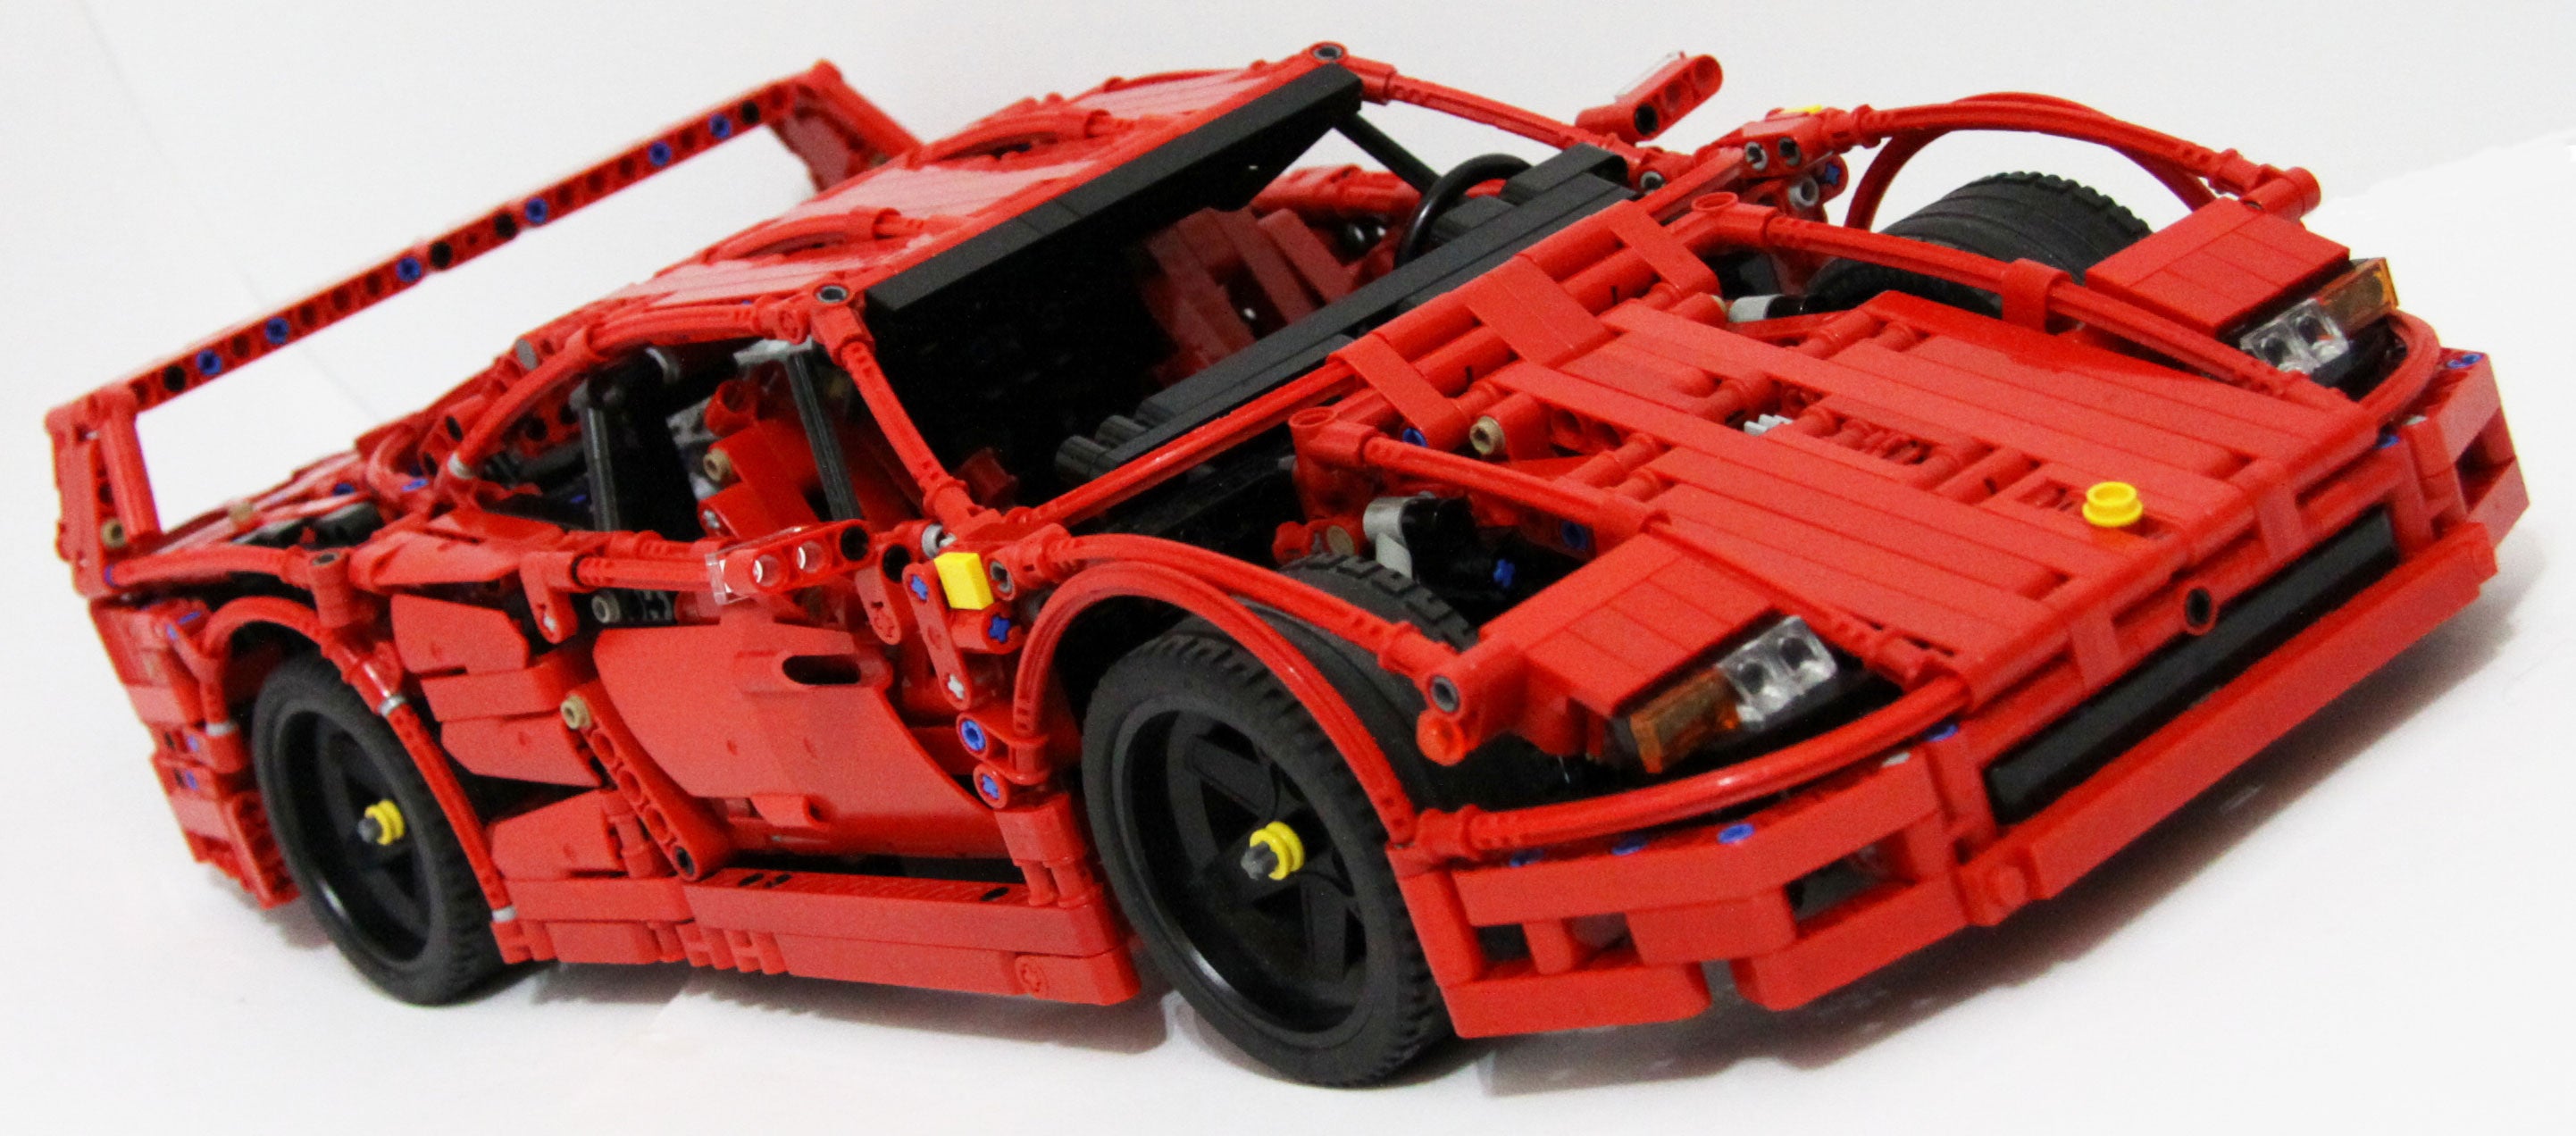 This Lego Ferrari F40 is the coolest